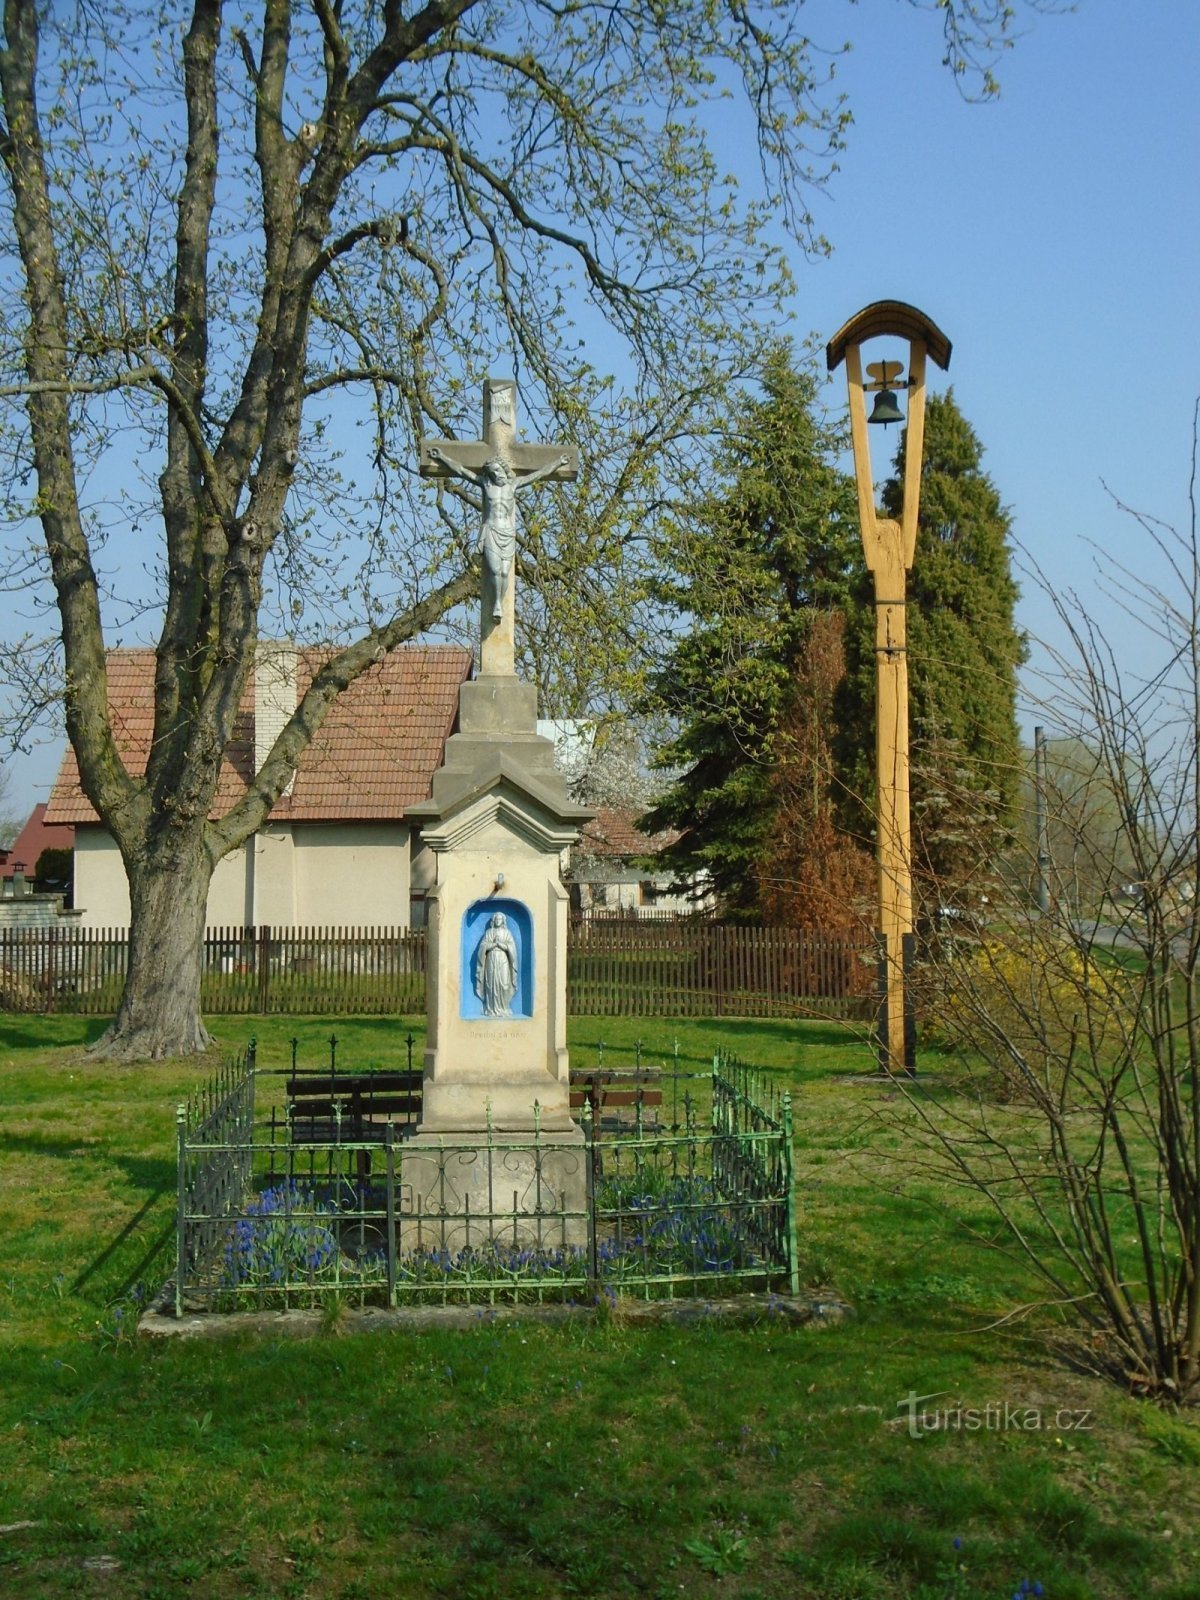 Cross with bell (Jehlice, ngày 9.4.2019 tháng XNUMX năm XNUMX)